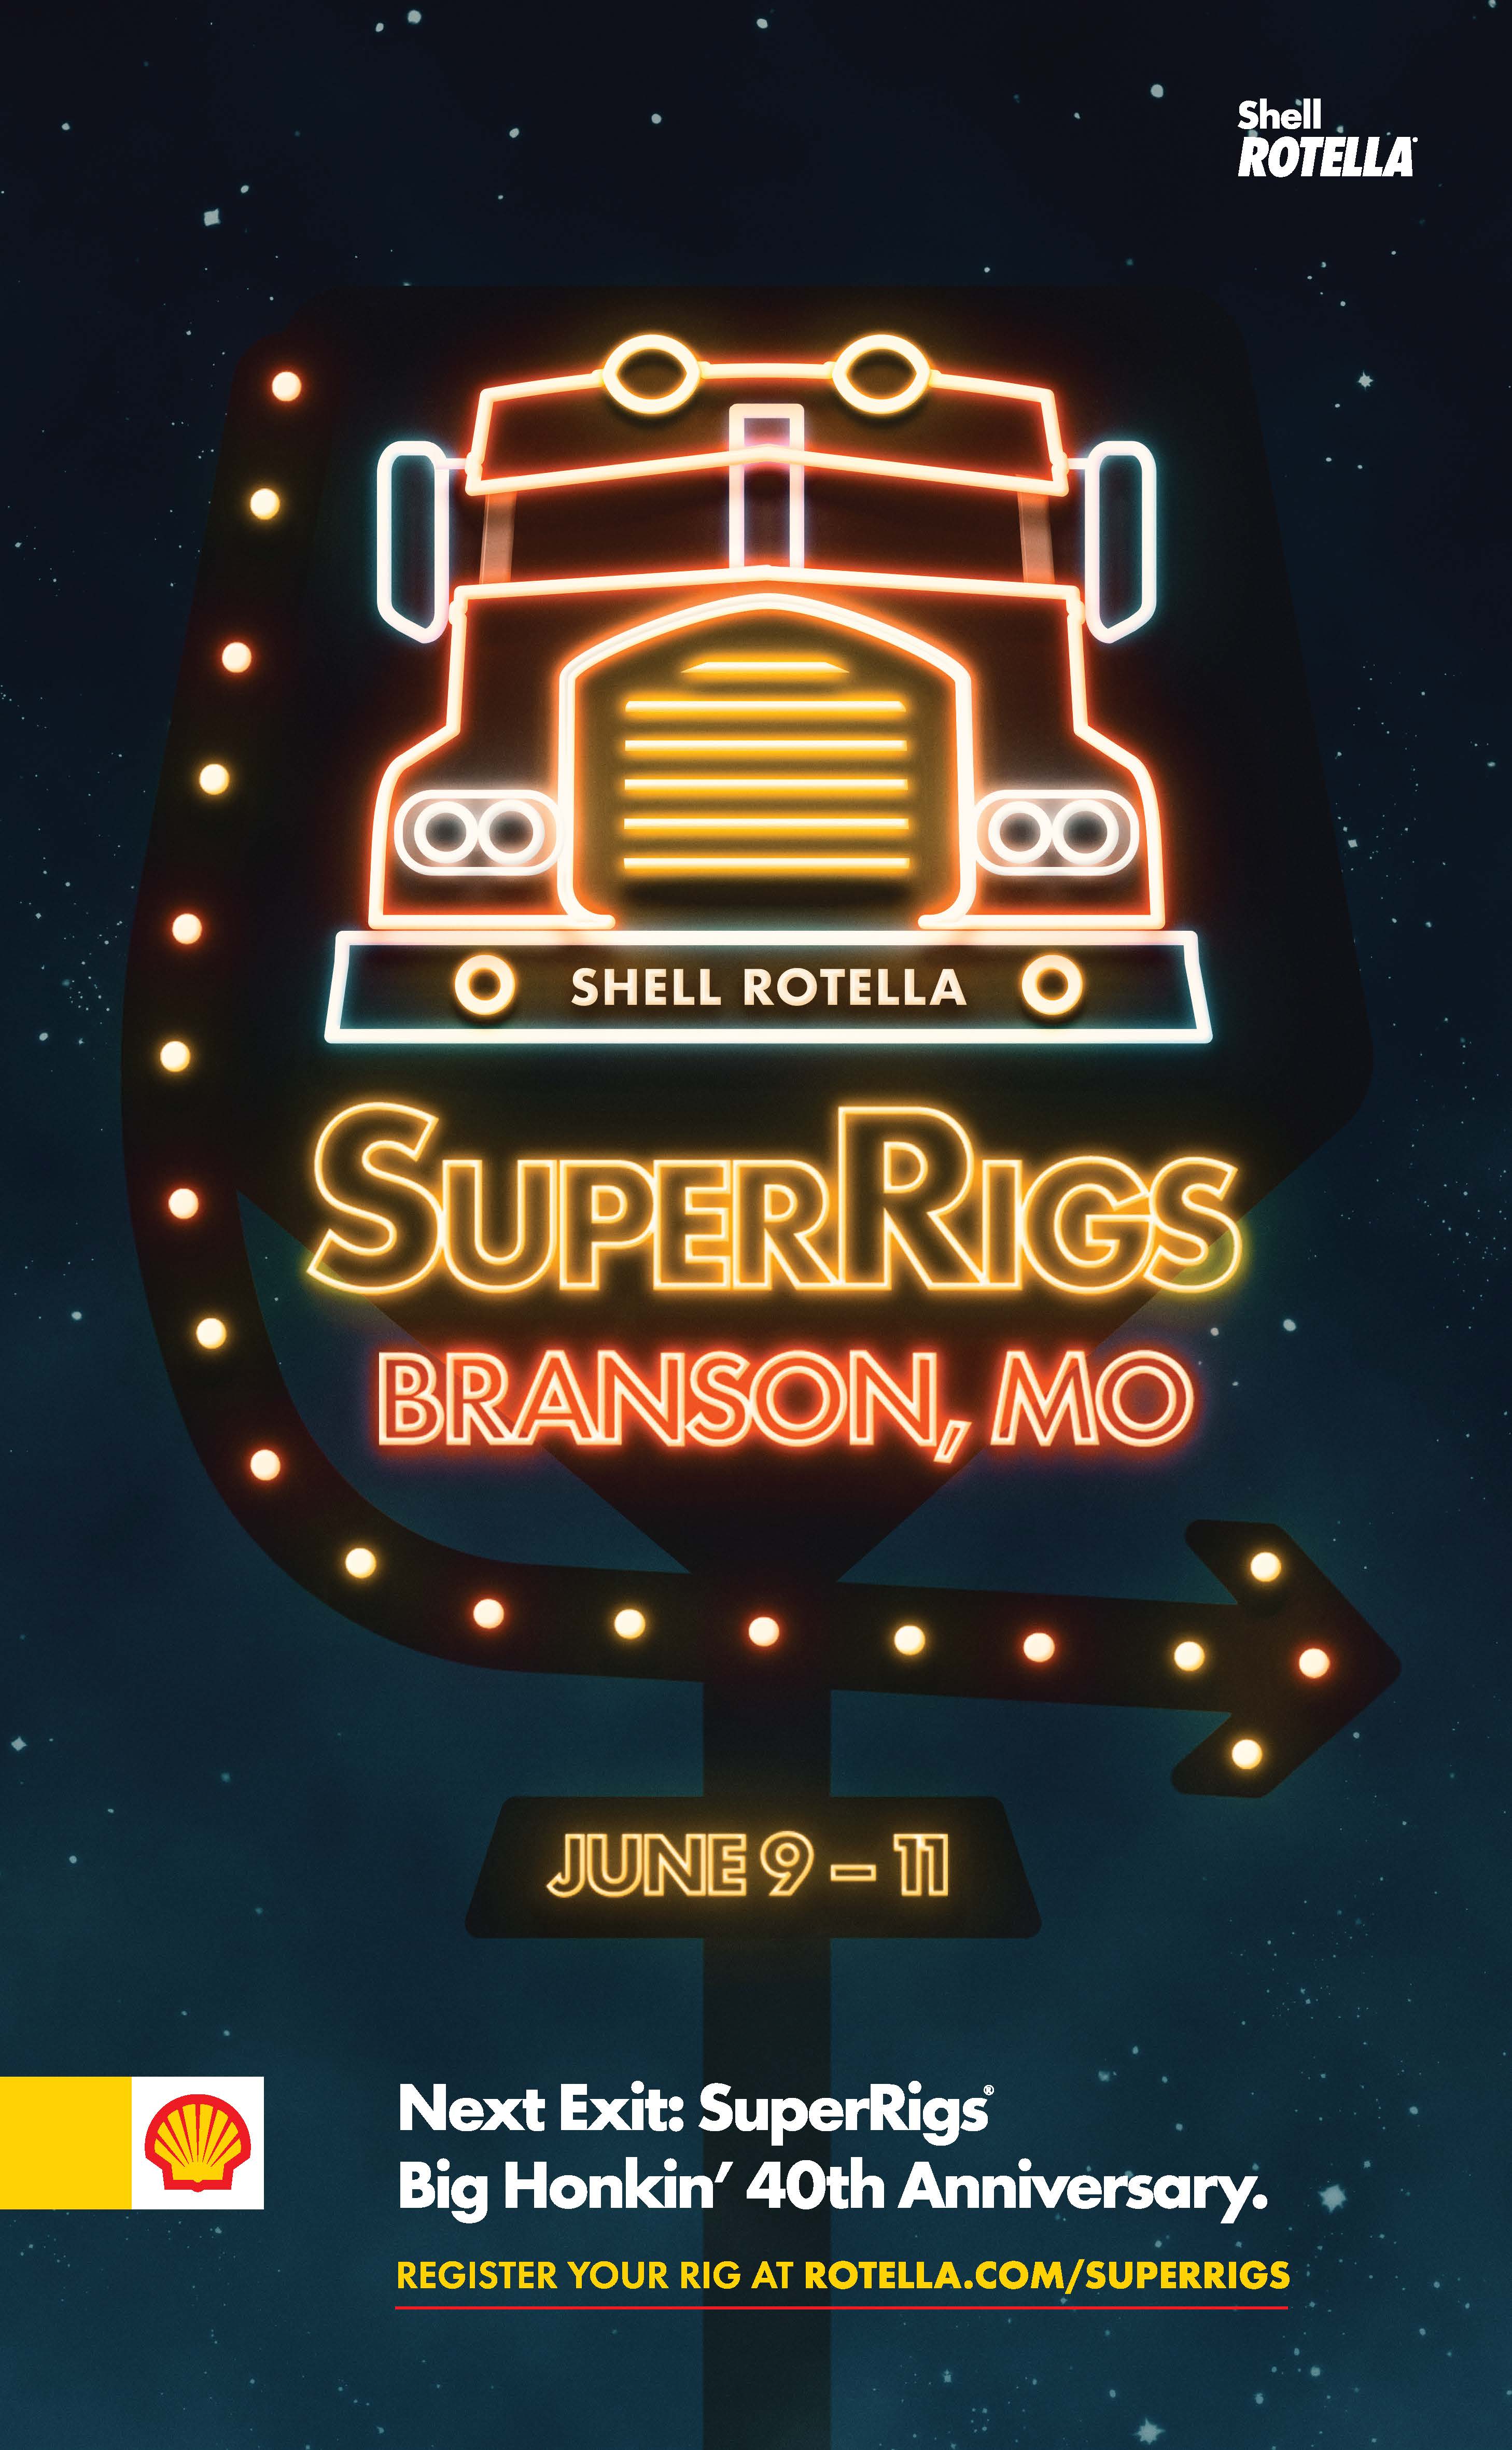 Neon sign reading "Shell Rotella SuperRigs, Branson, MO, June 9-11"